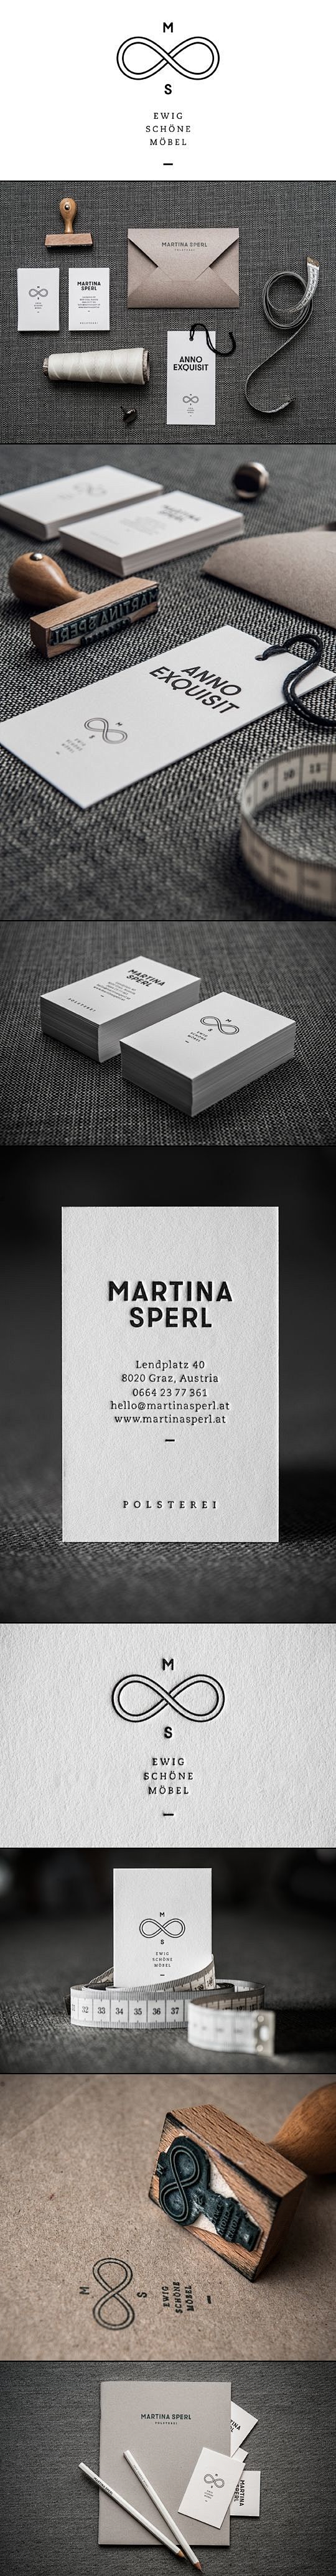 Martina Sperl Brandi...